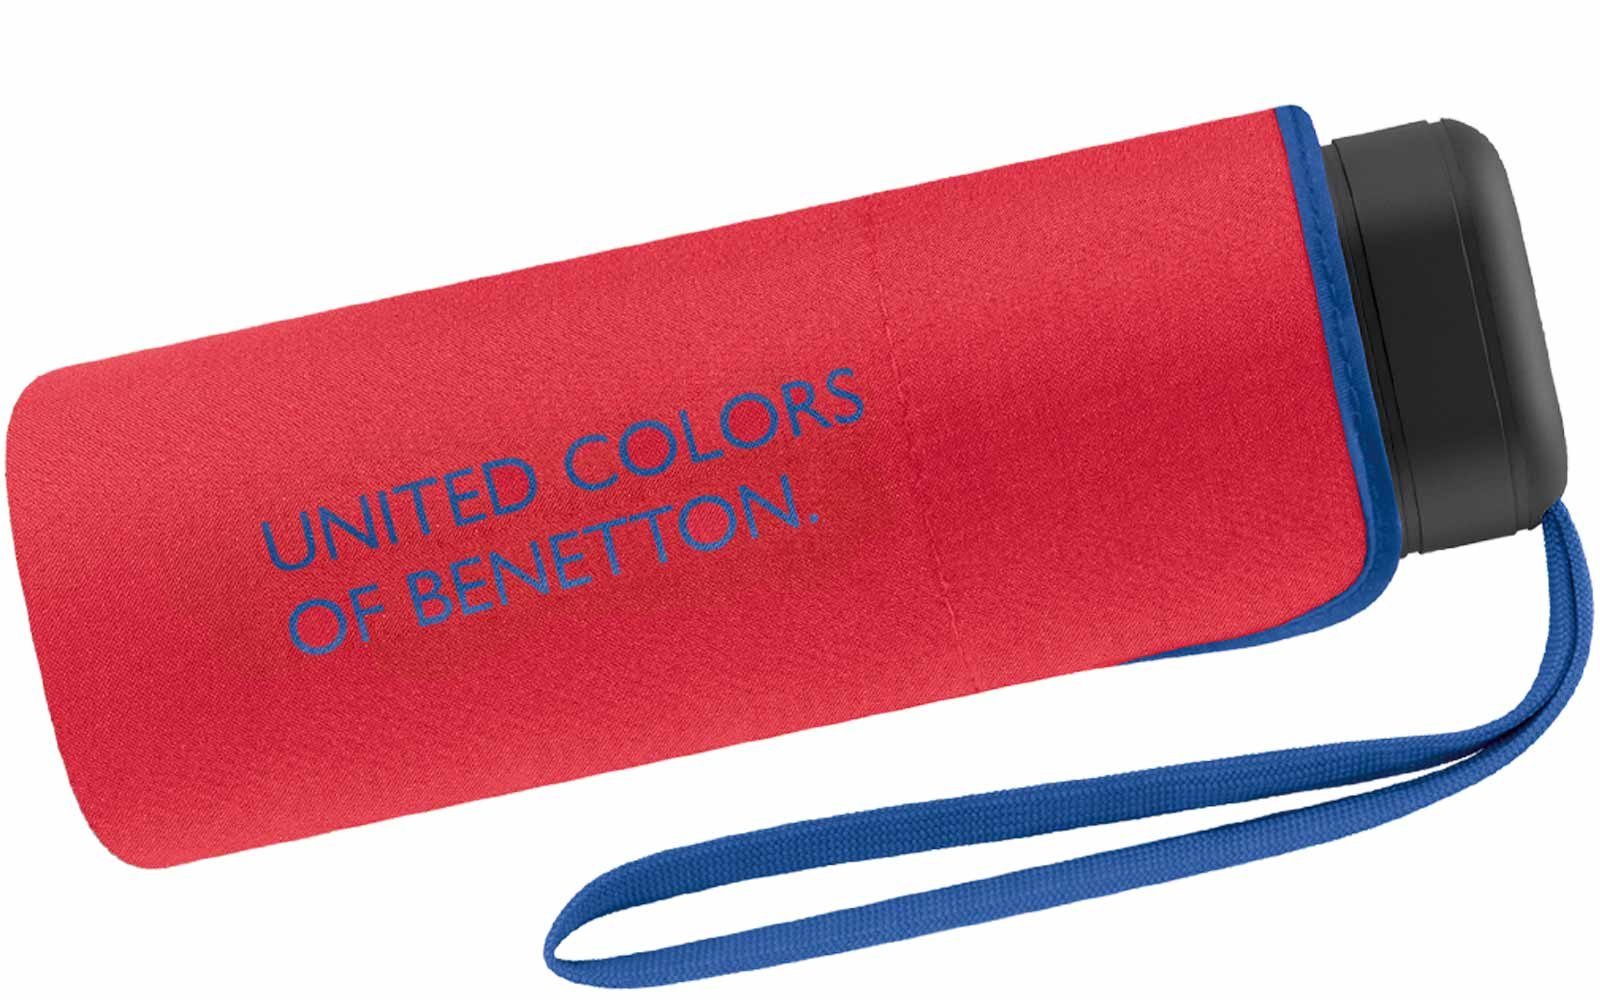 United Colors of Benetton Handöffner, mit - Taschenregenschirm rot-blau am Schirmrand Damen-Regenschirm winziger mit Kontrastfarben